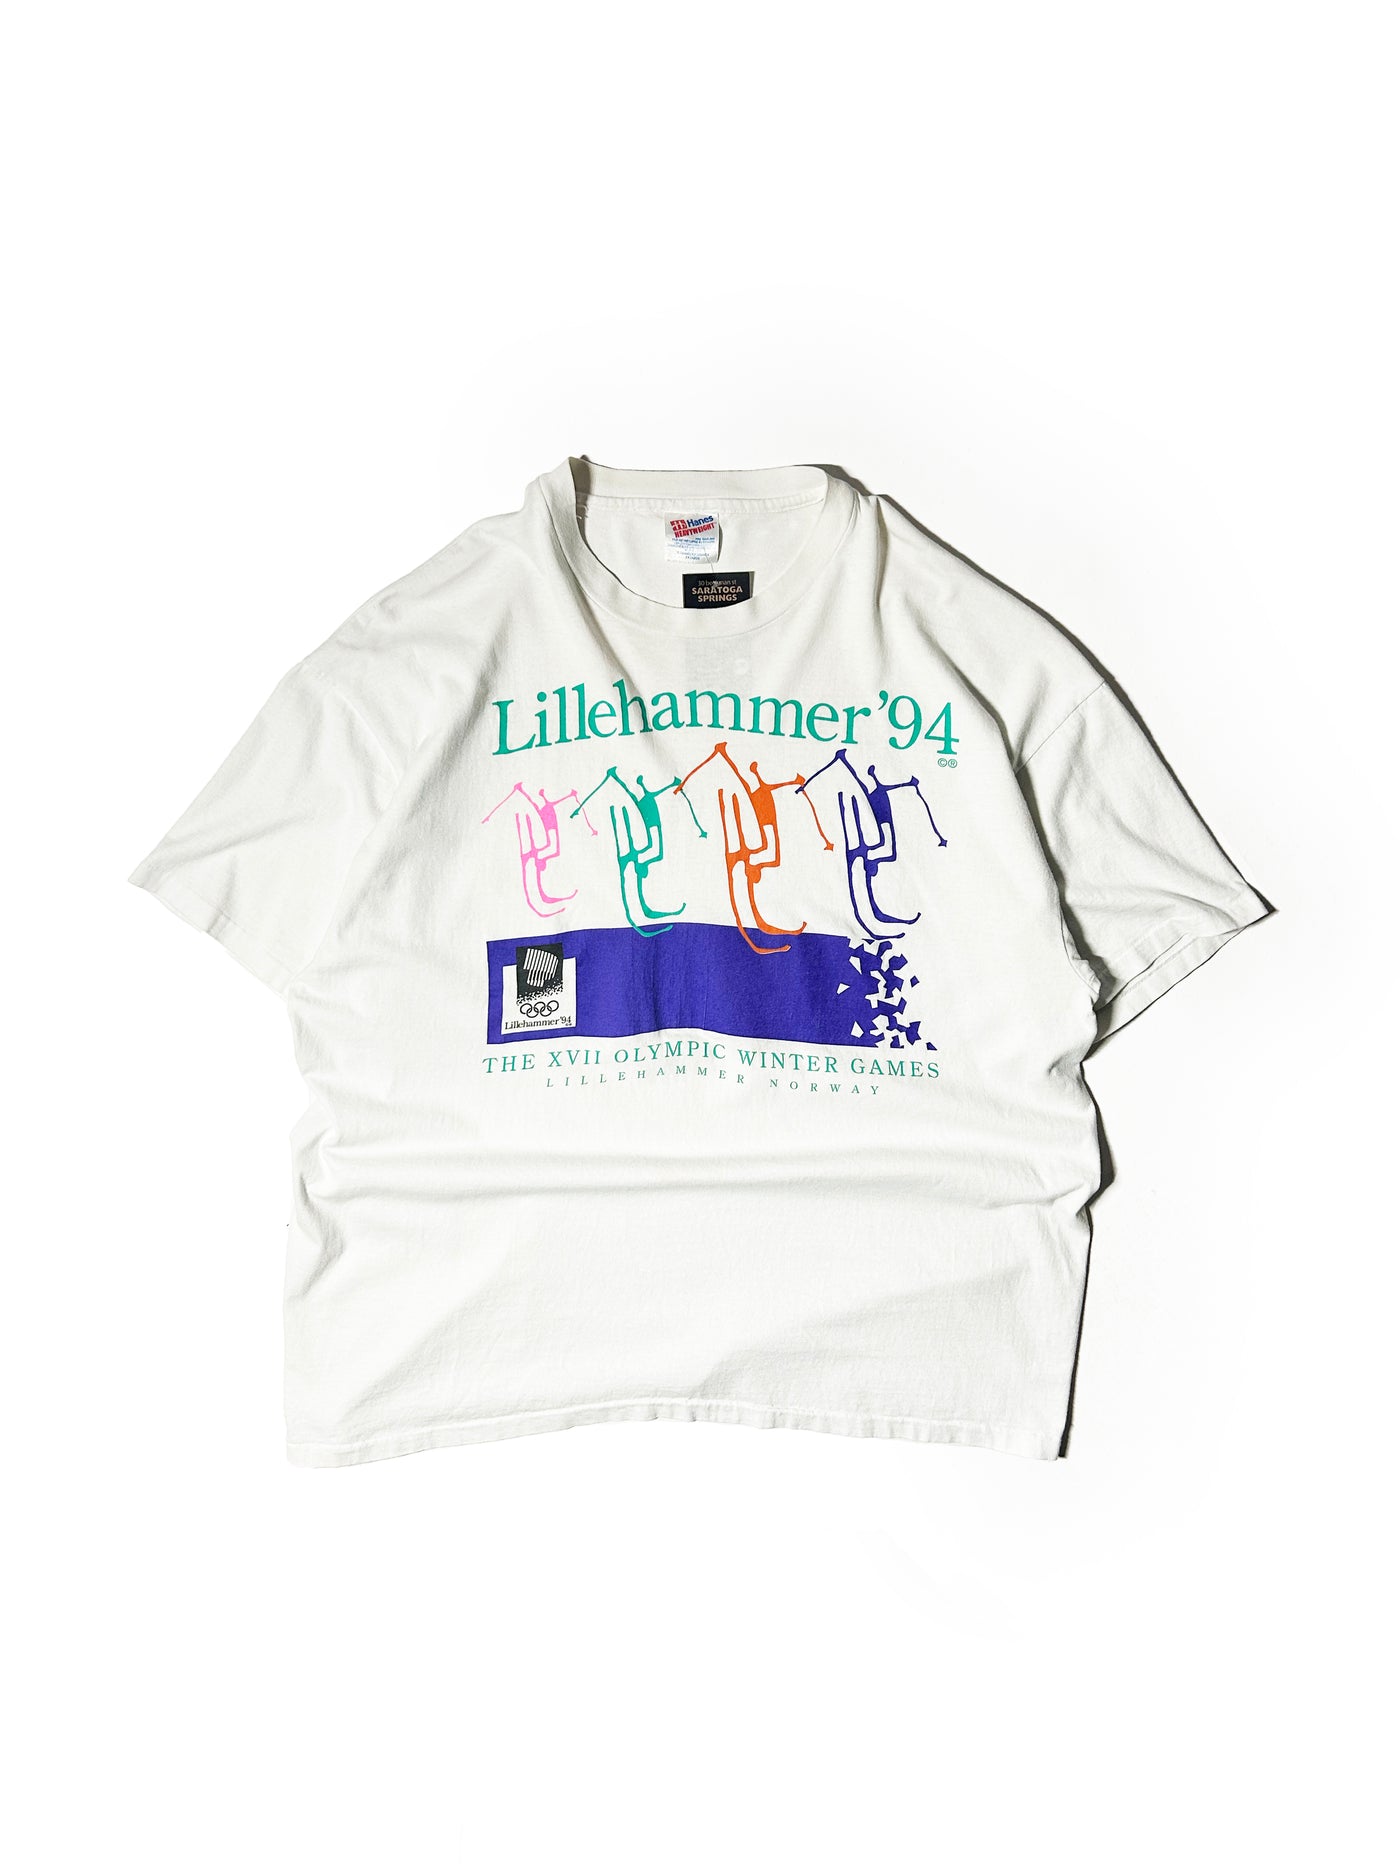 Vintage 1994 Lillehammer Winter Games T-Shirt